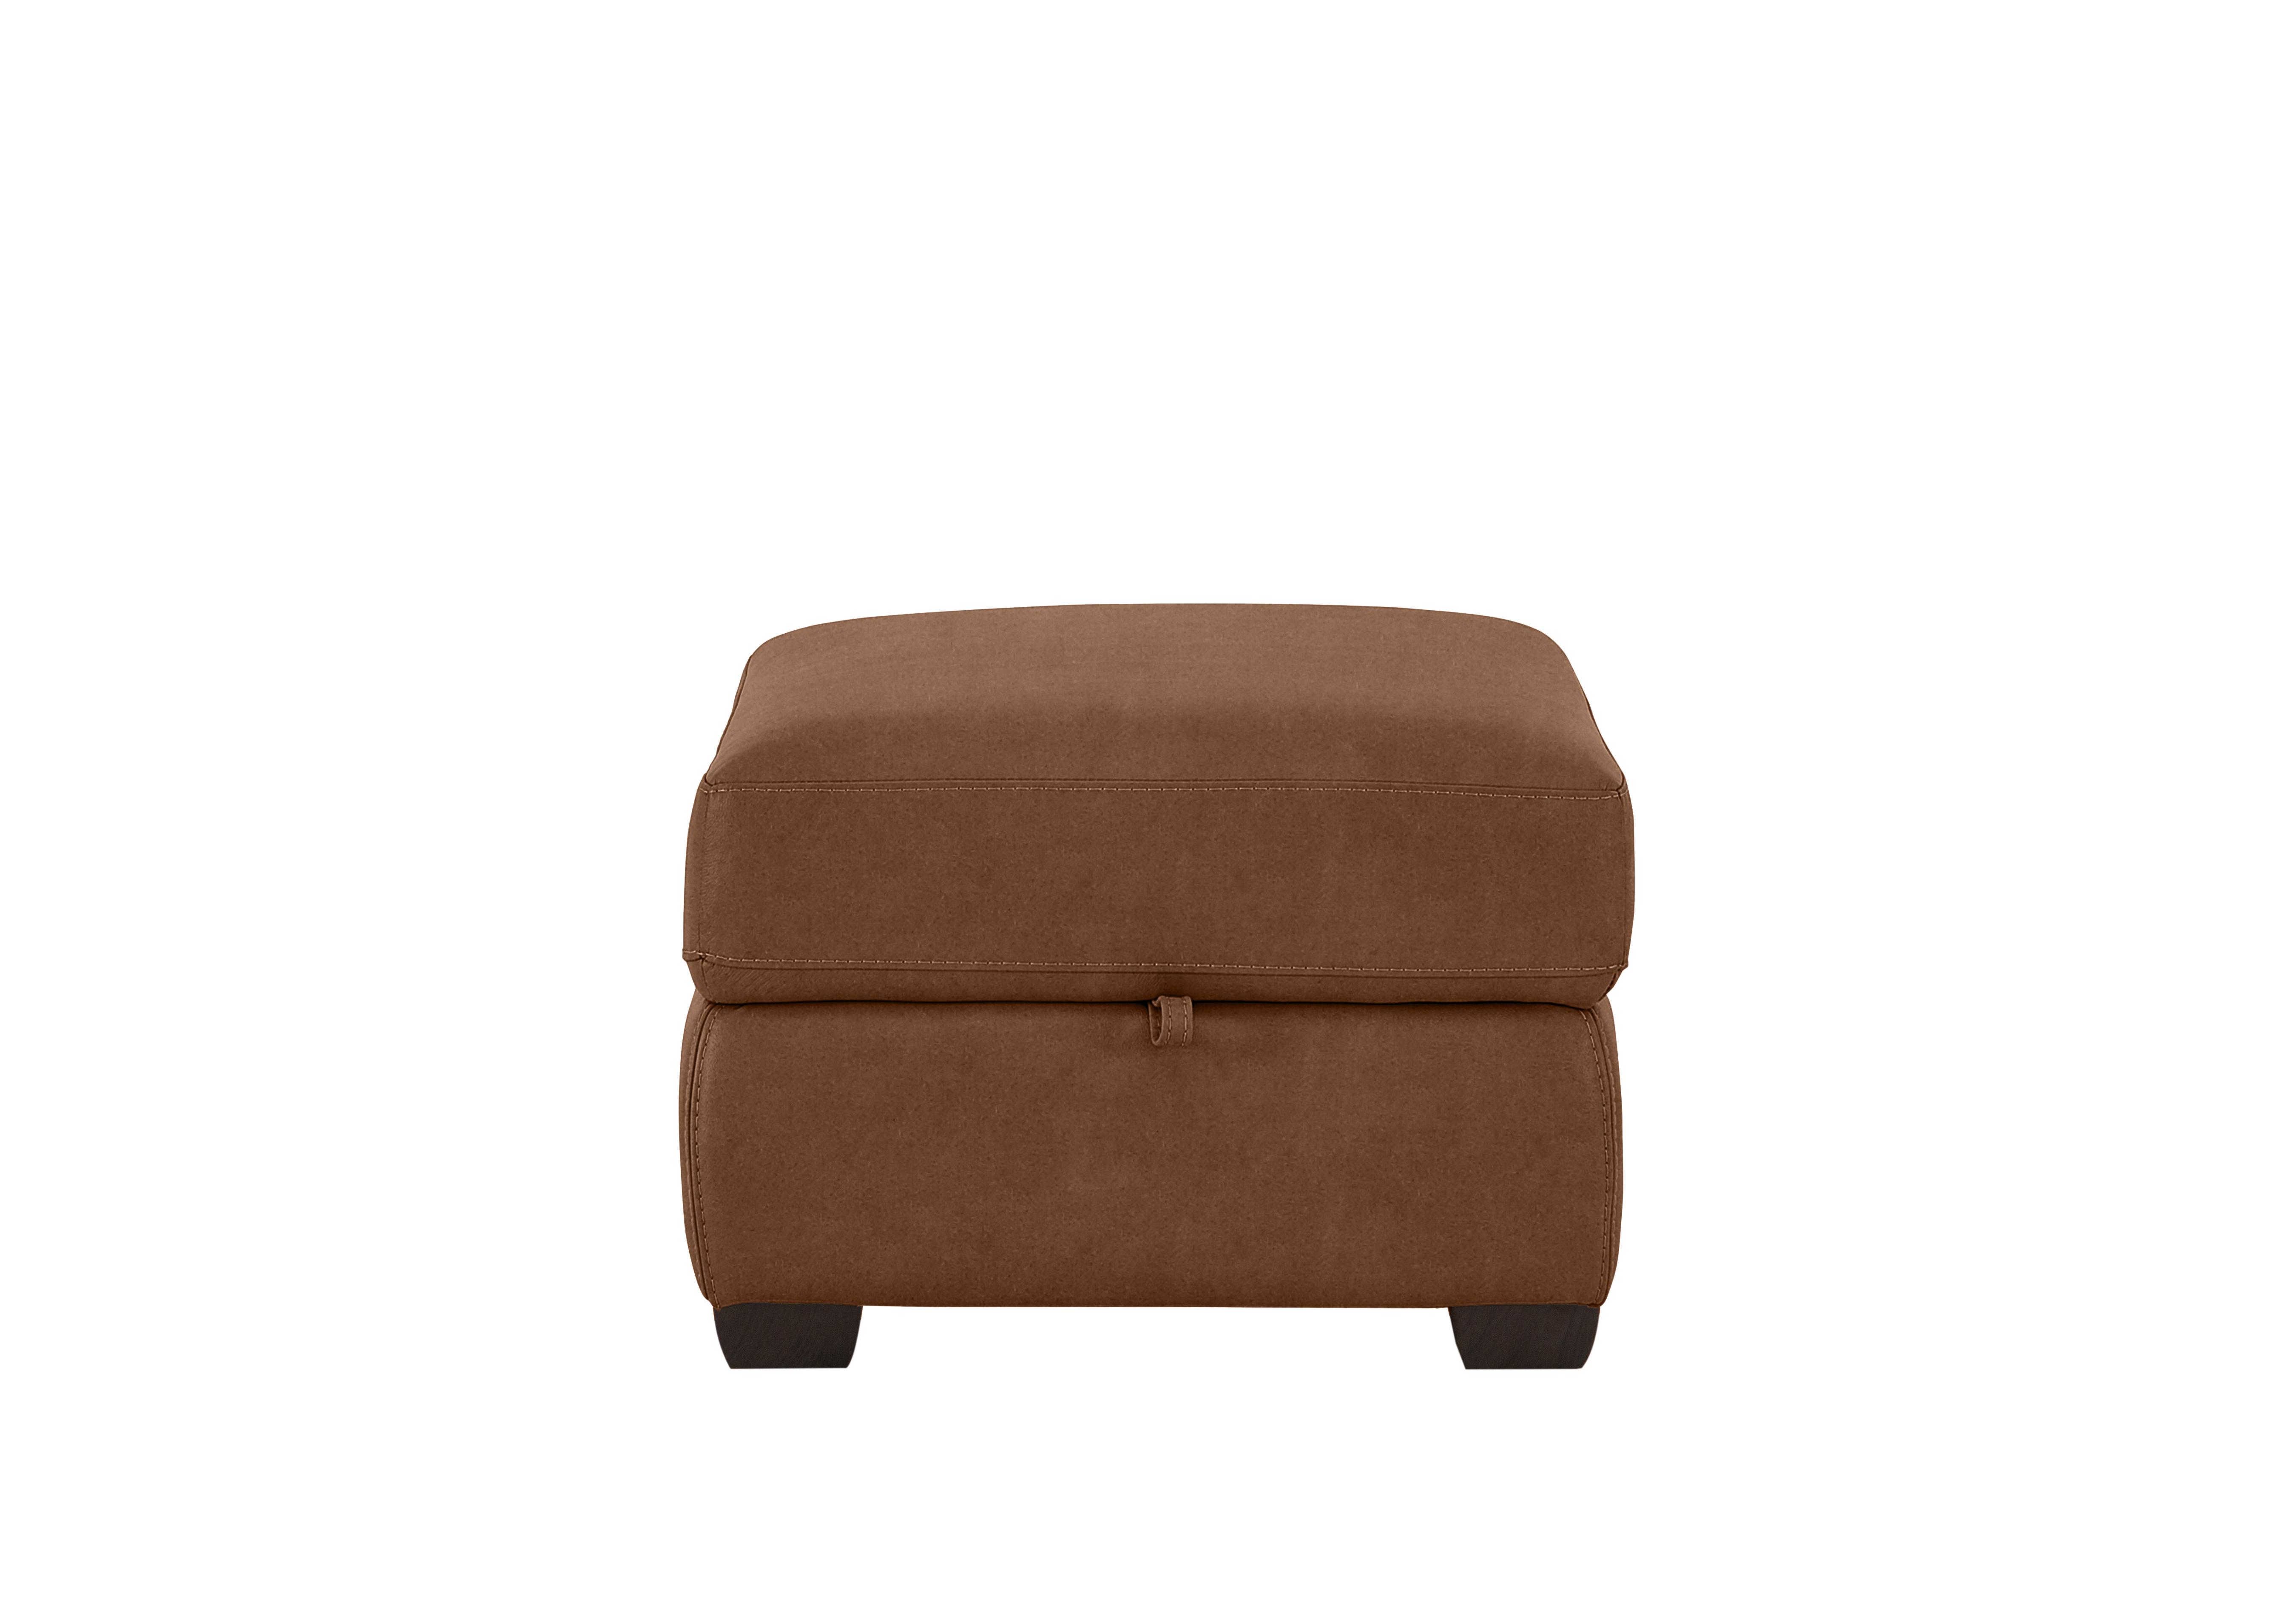 Chicago Fabric Storage Footstool in Bfa-Blj-R05 Hazelnut on Furniture Village